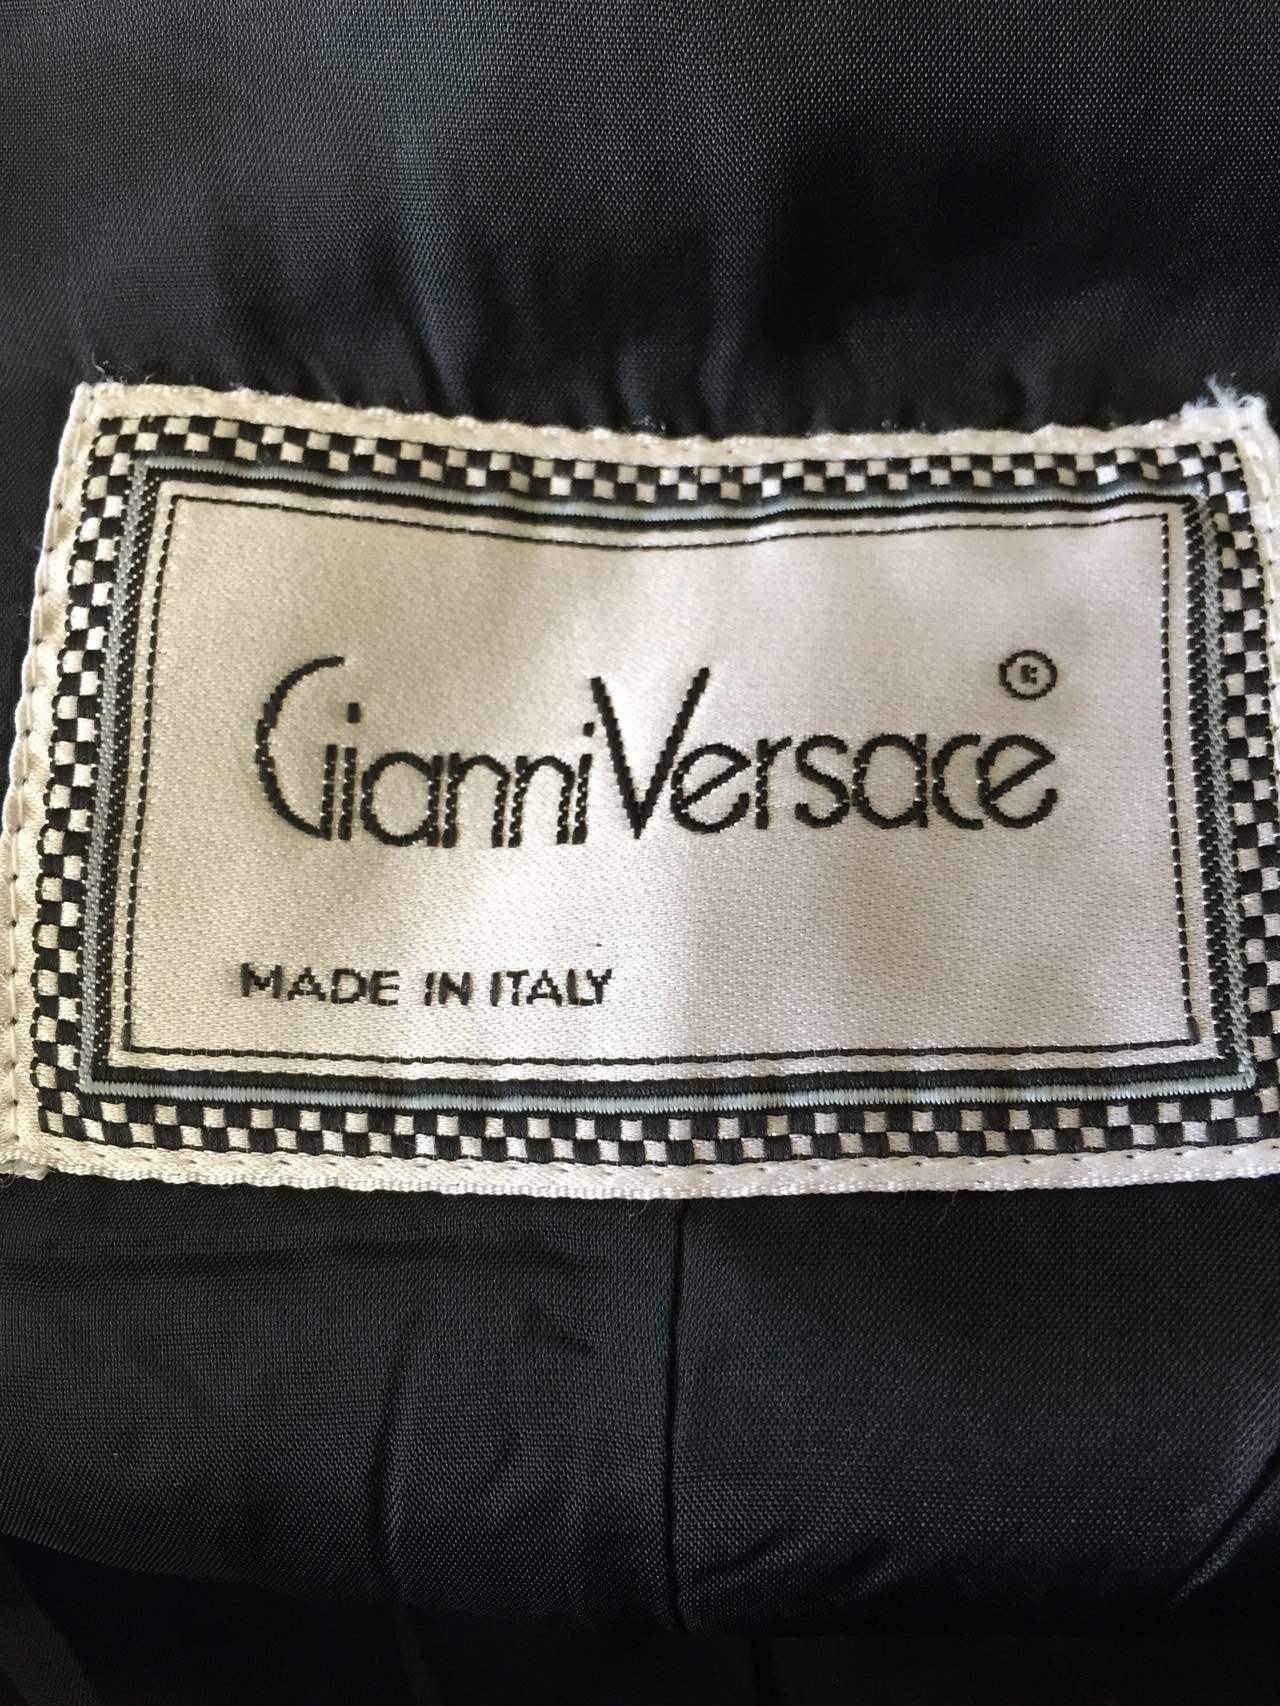 Gianni Versace 1987 Black Linen / Silk Skirt Suit 3